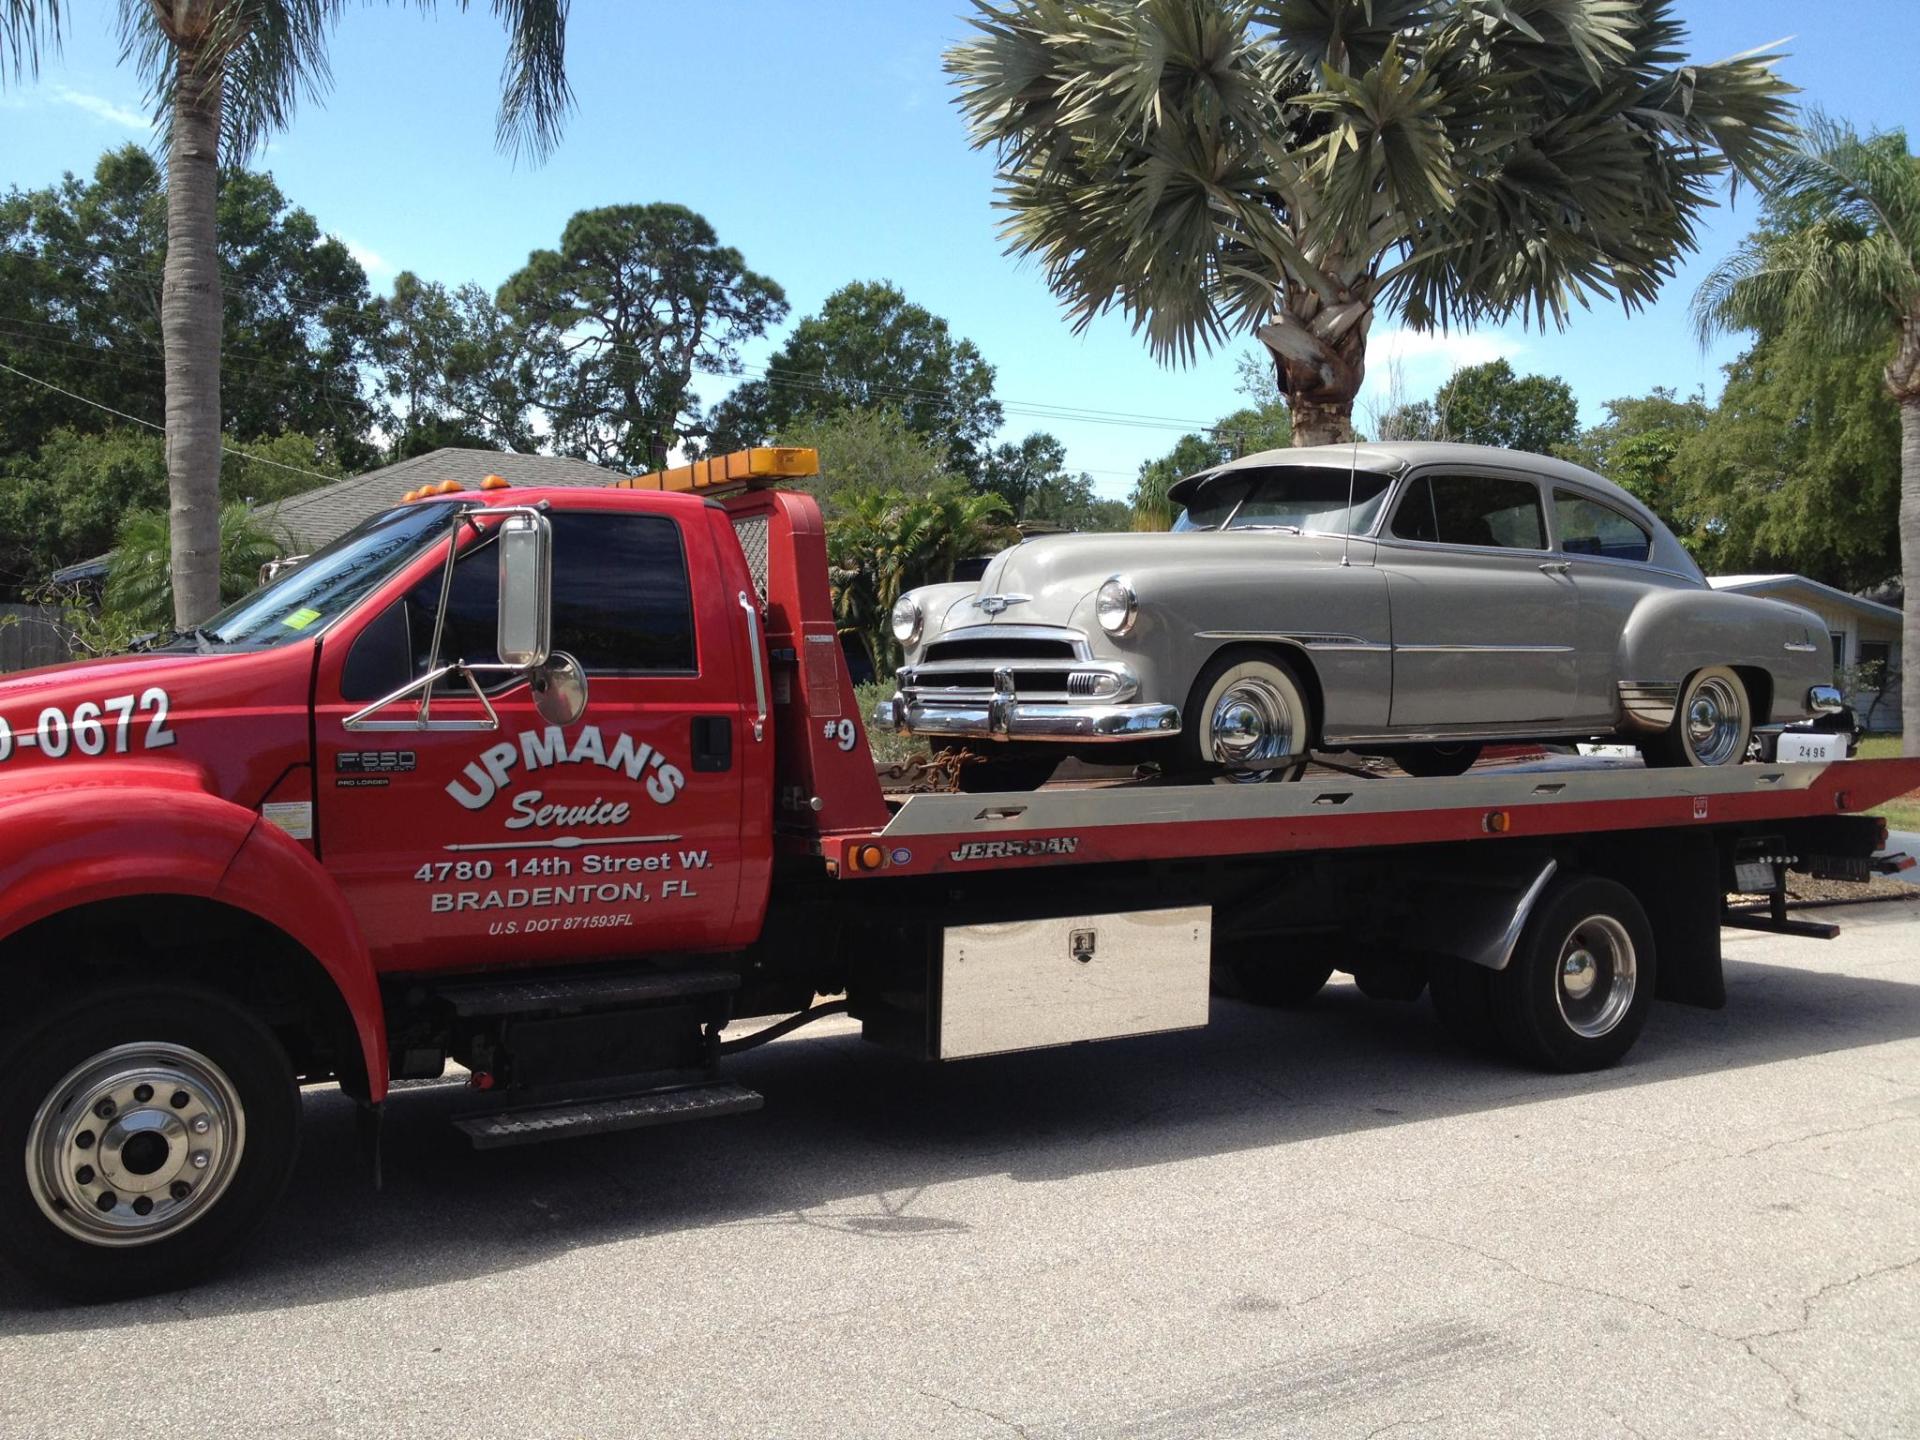 Towing a silver car - Roadside assistance in Sarasota, FL